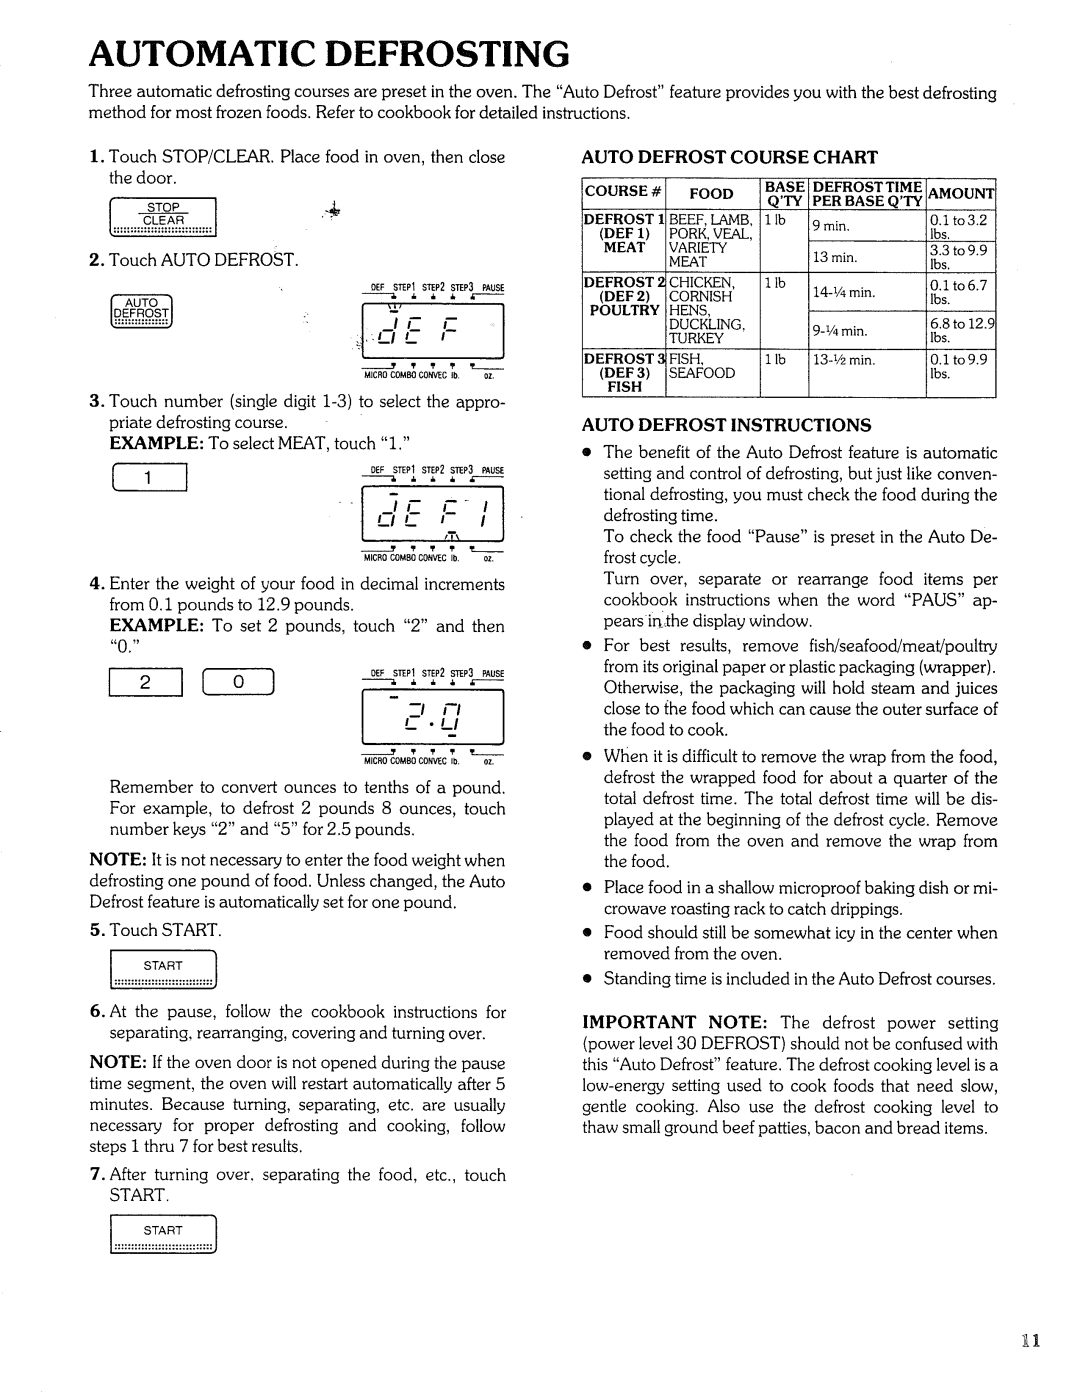 Sears Microwave Oven manual Automatic Defrosting, Ms co c, L Li - -I Fi 